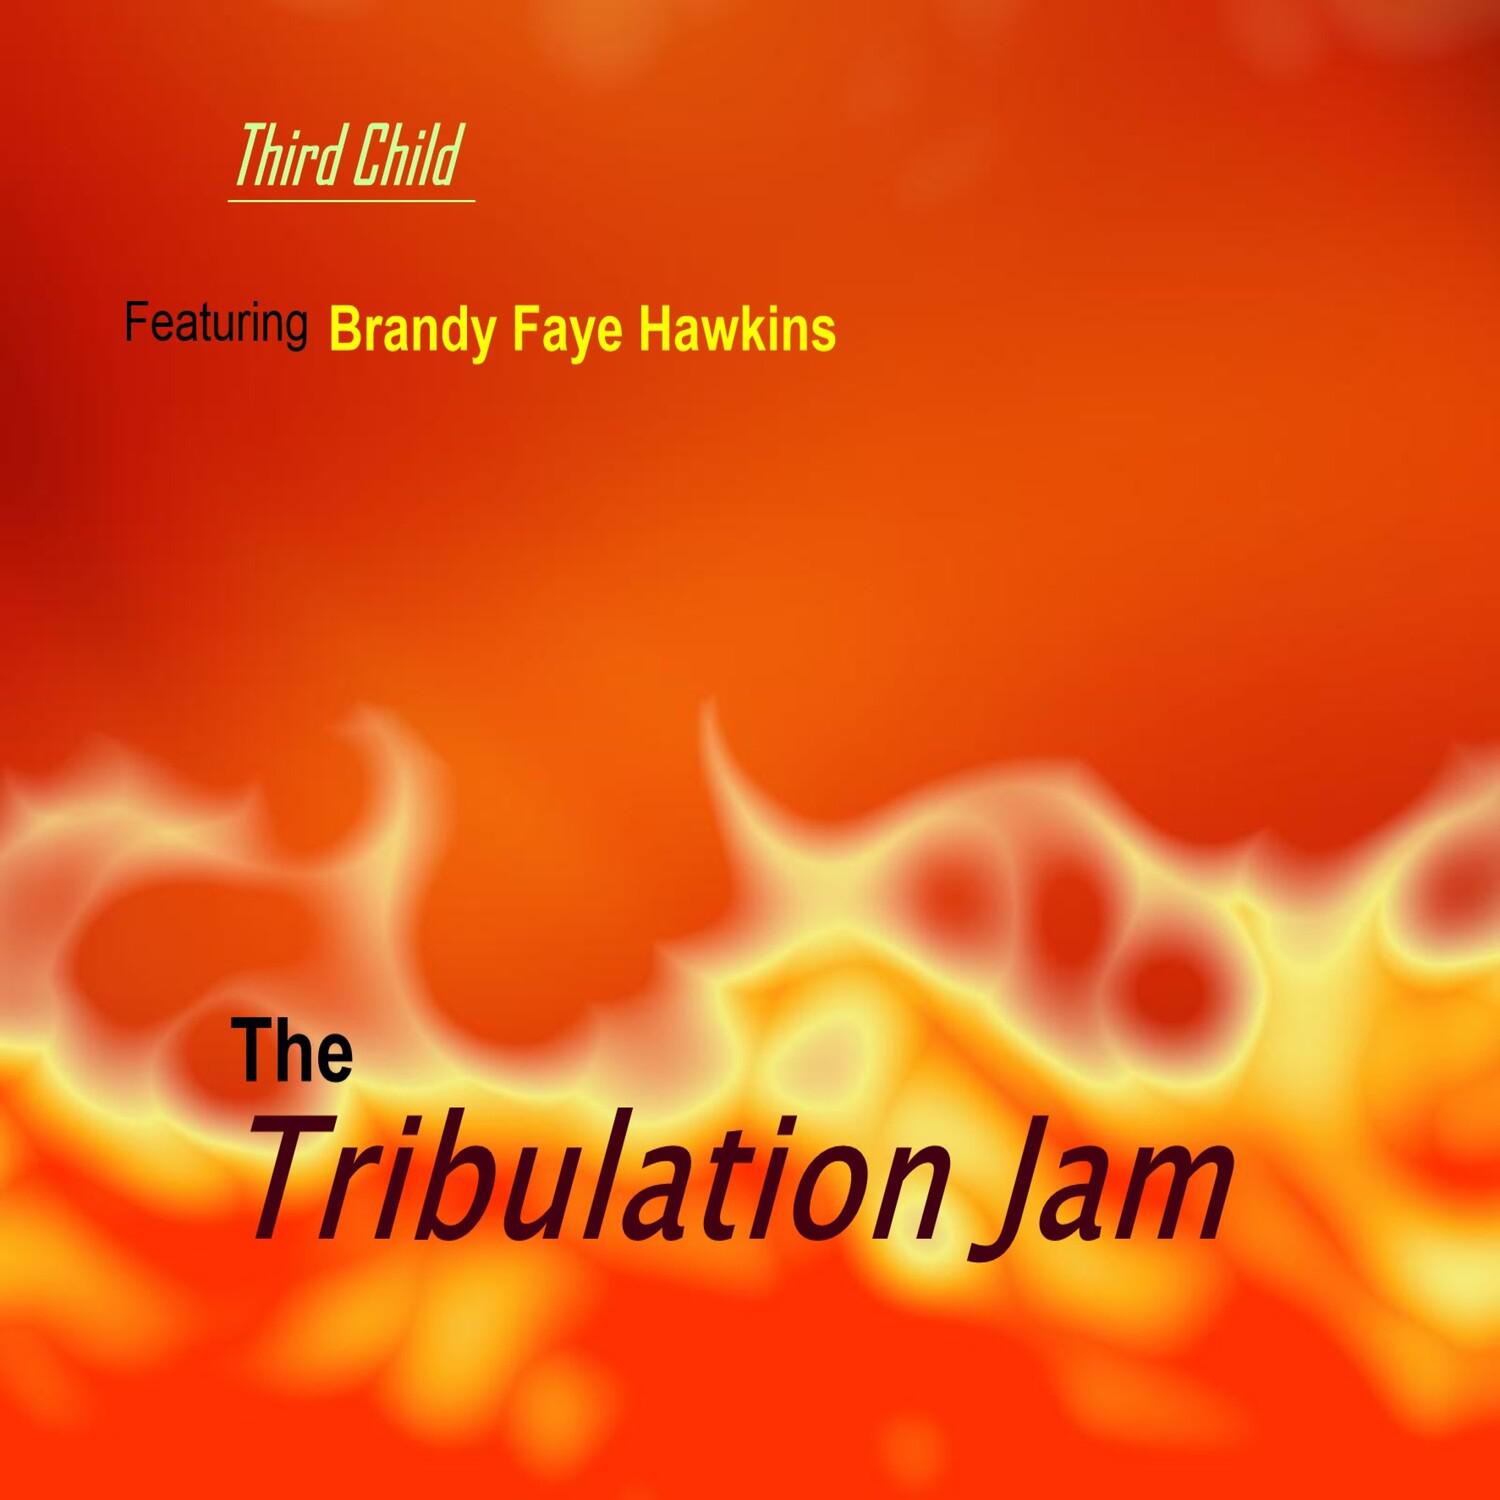 The Tribulation Jam